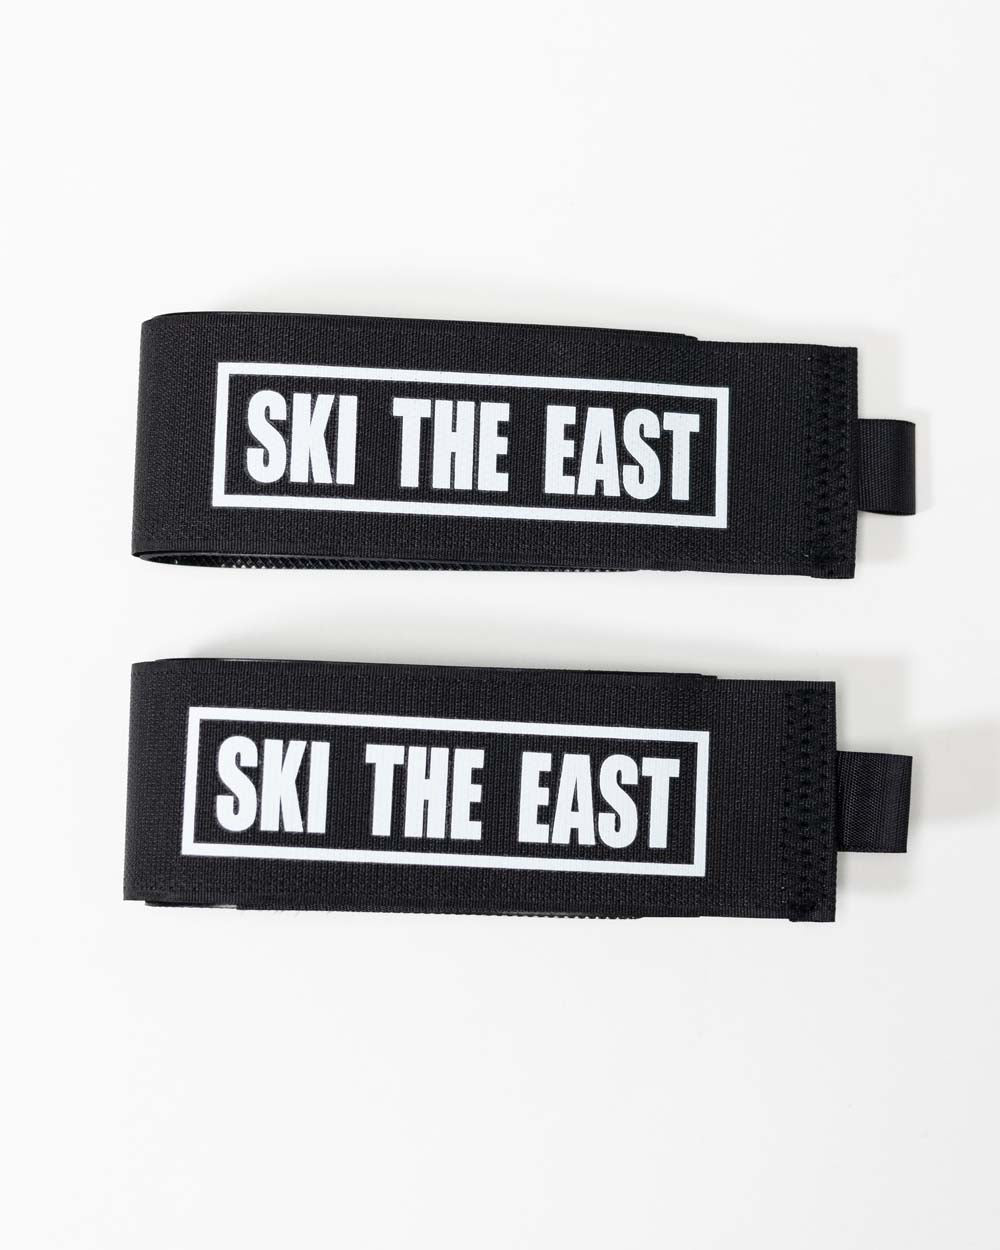 Bulk Ski Strap – The Ski Strap